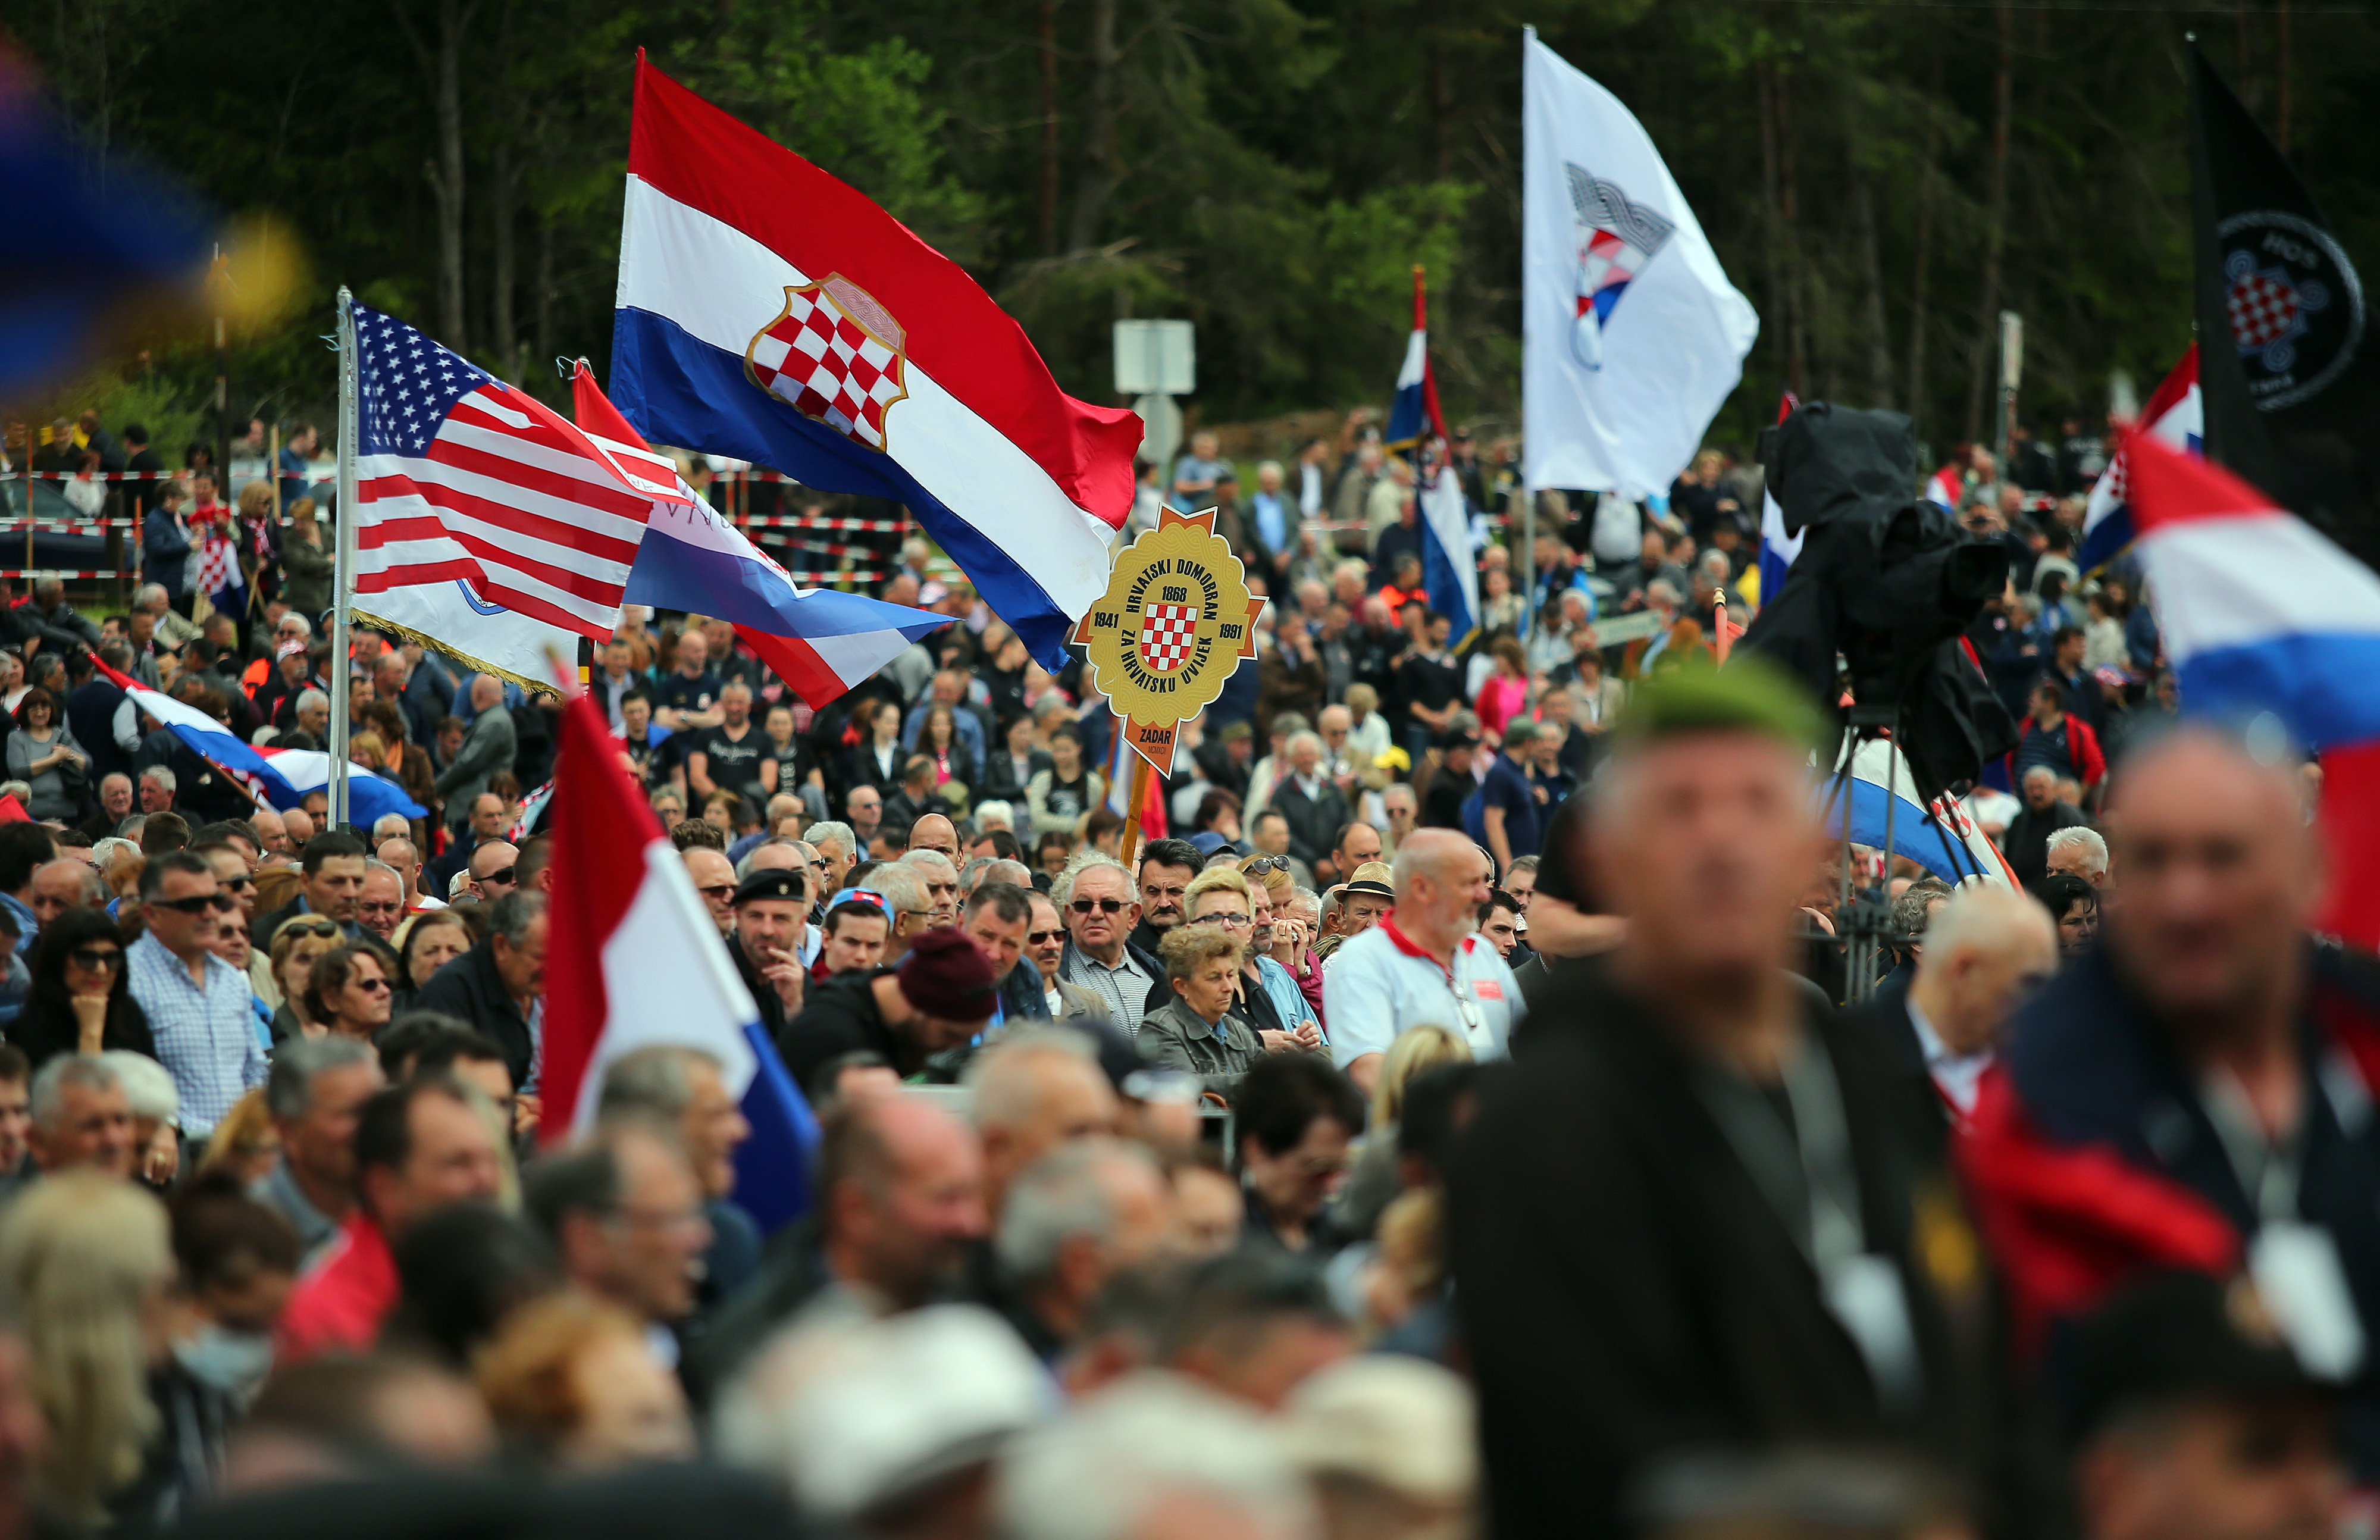  Croatian Archbishop urges reconciliation on massacre anniversary 